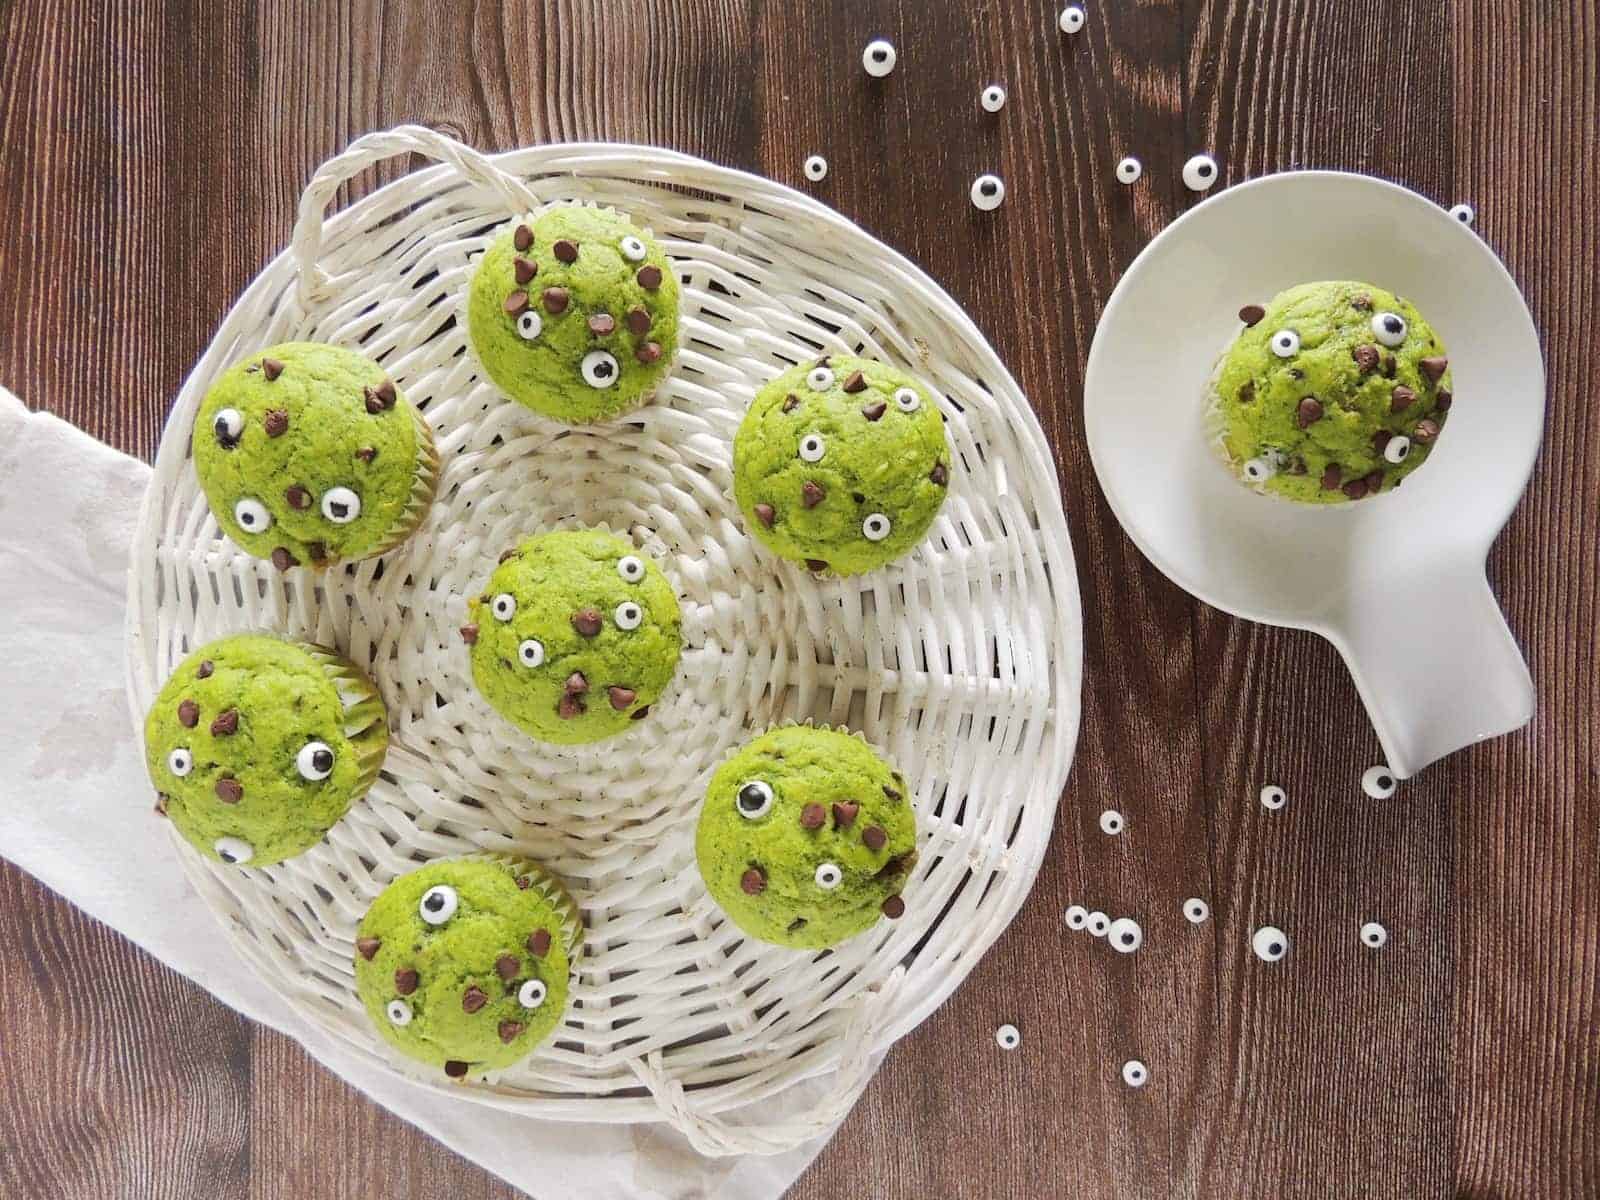 Green monster muffins in a wicker basket.